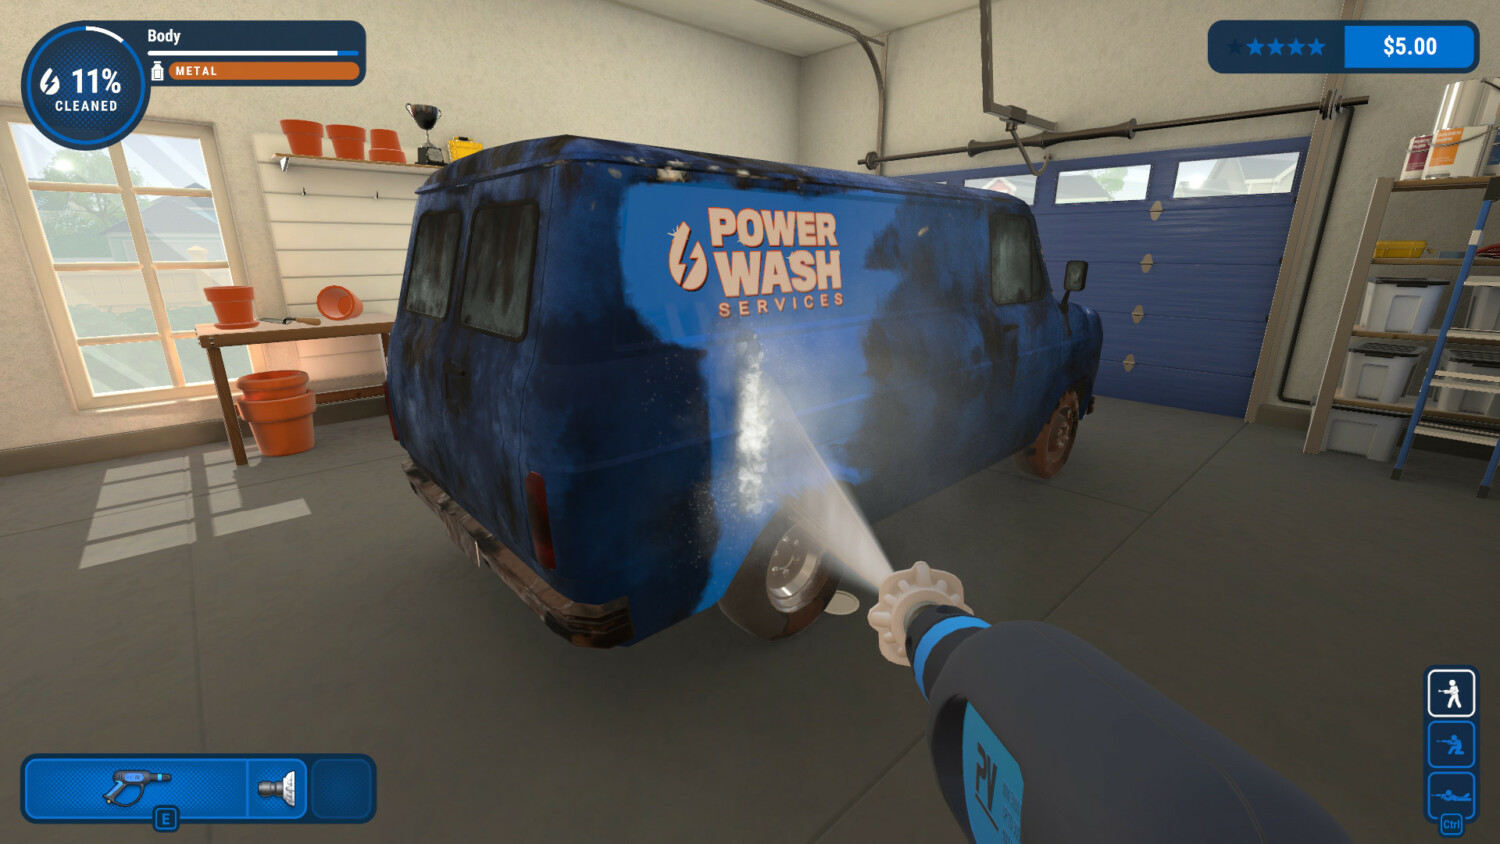 PowerWash Simulator Switch review – wash away your worries